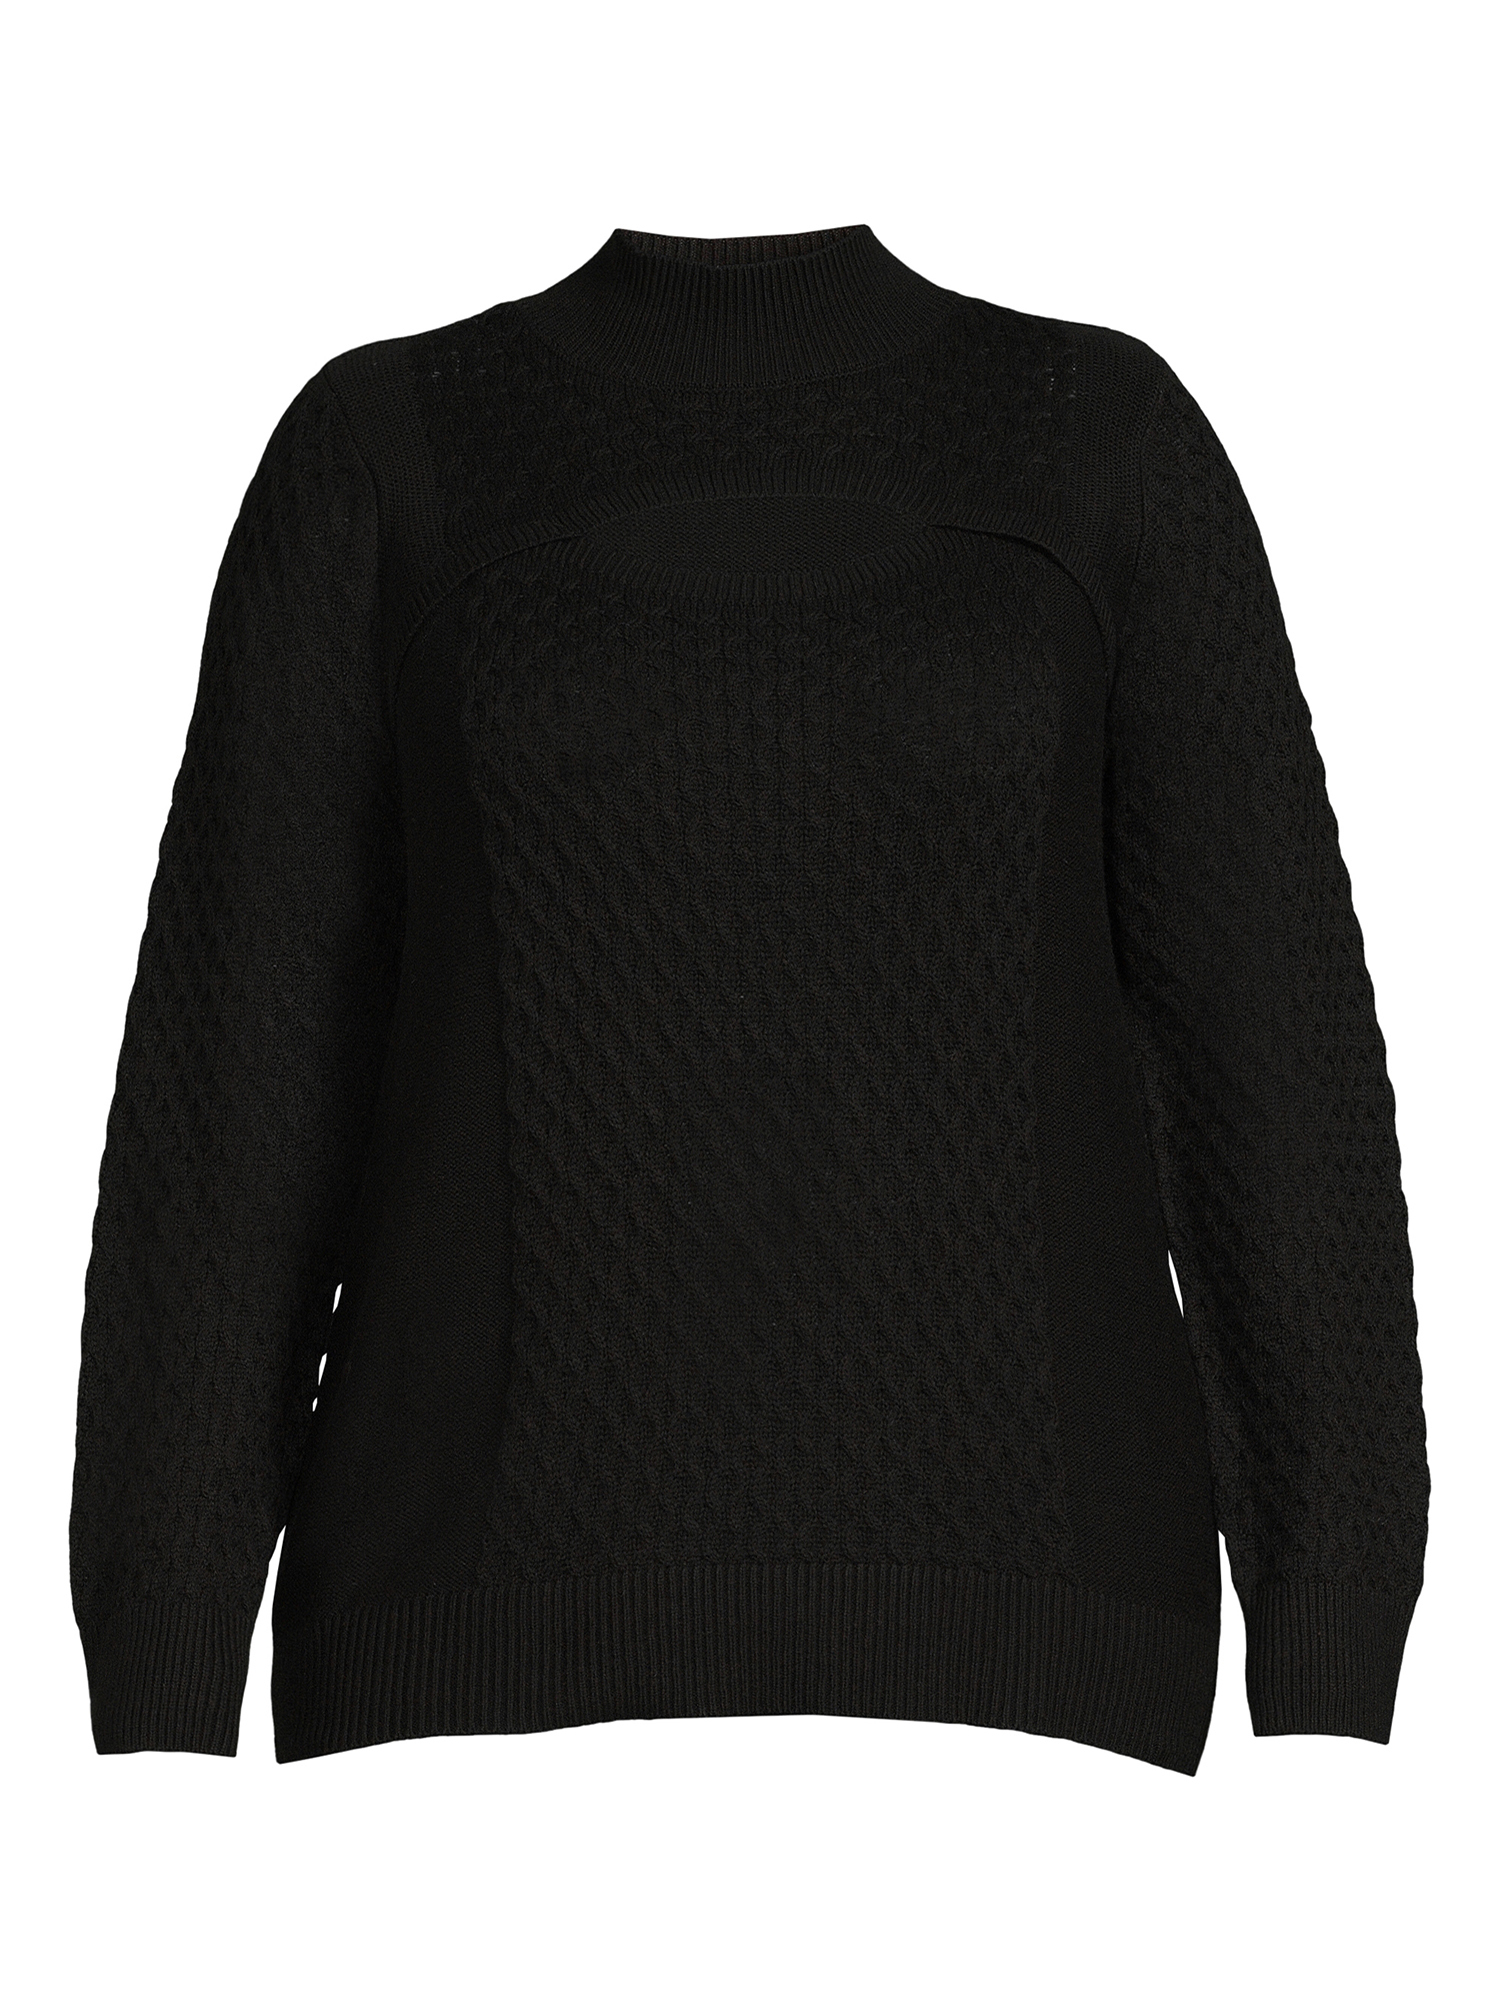 Terra & Sky Women's Cutout Pullover Sweater - image 5 of 5